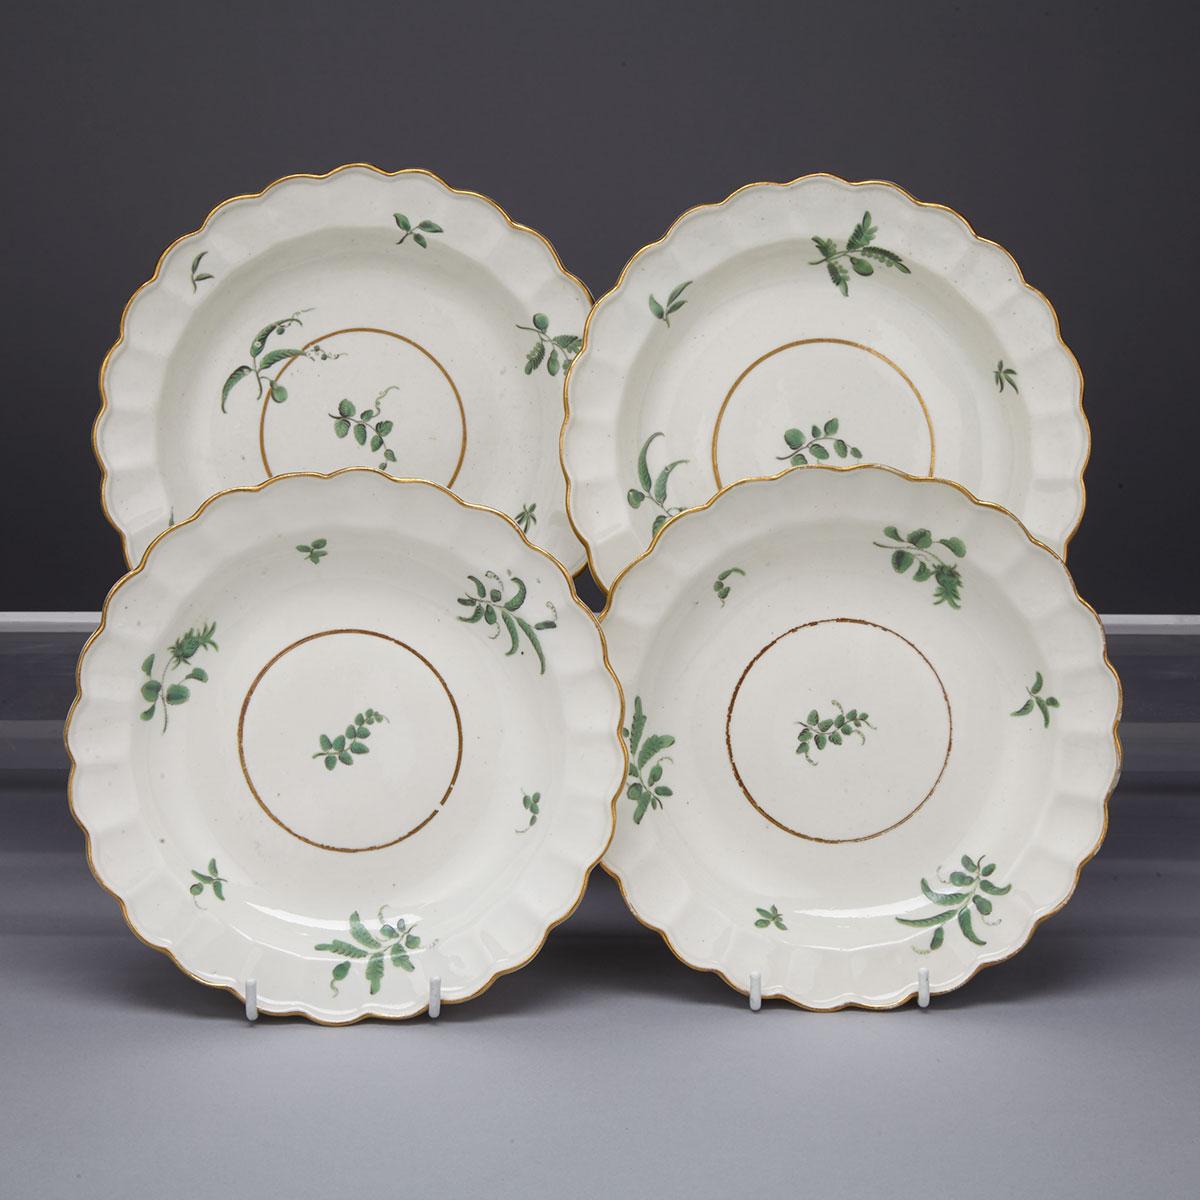 Four Worcester Plates, c.1775